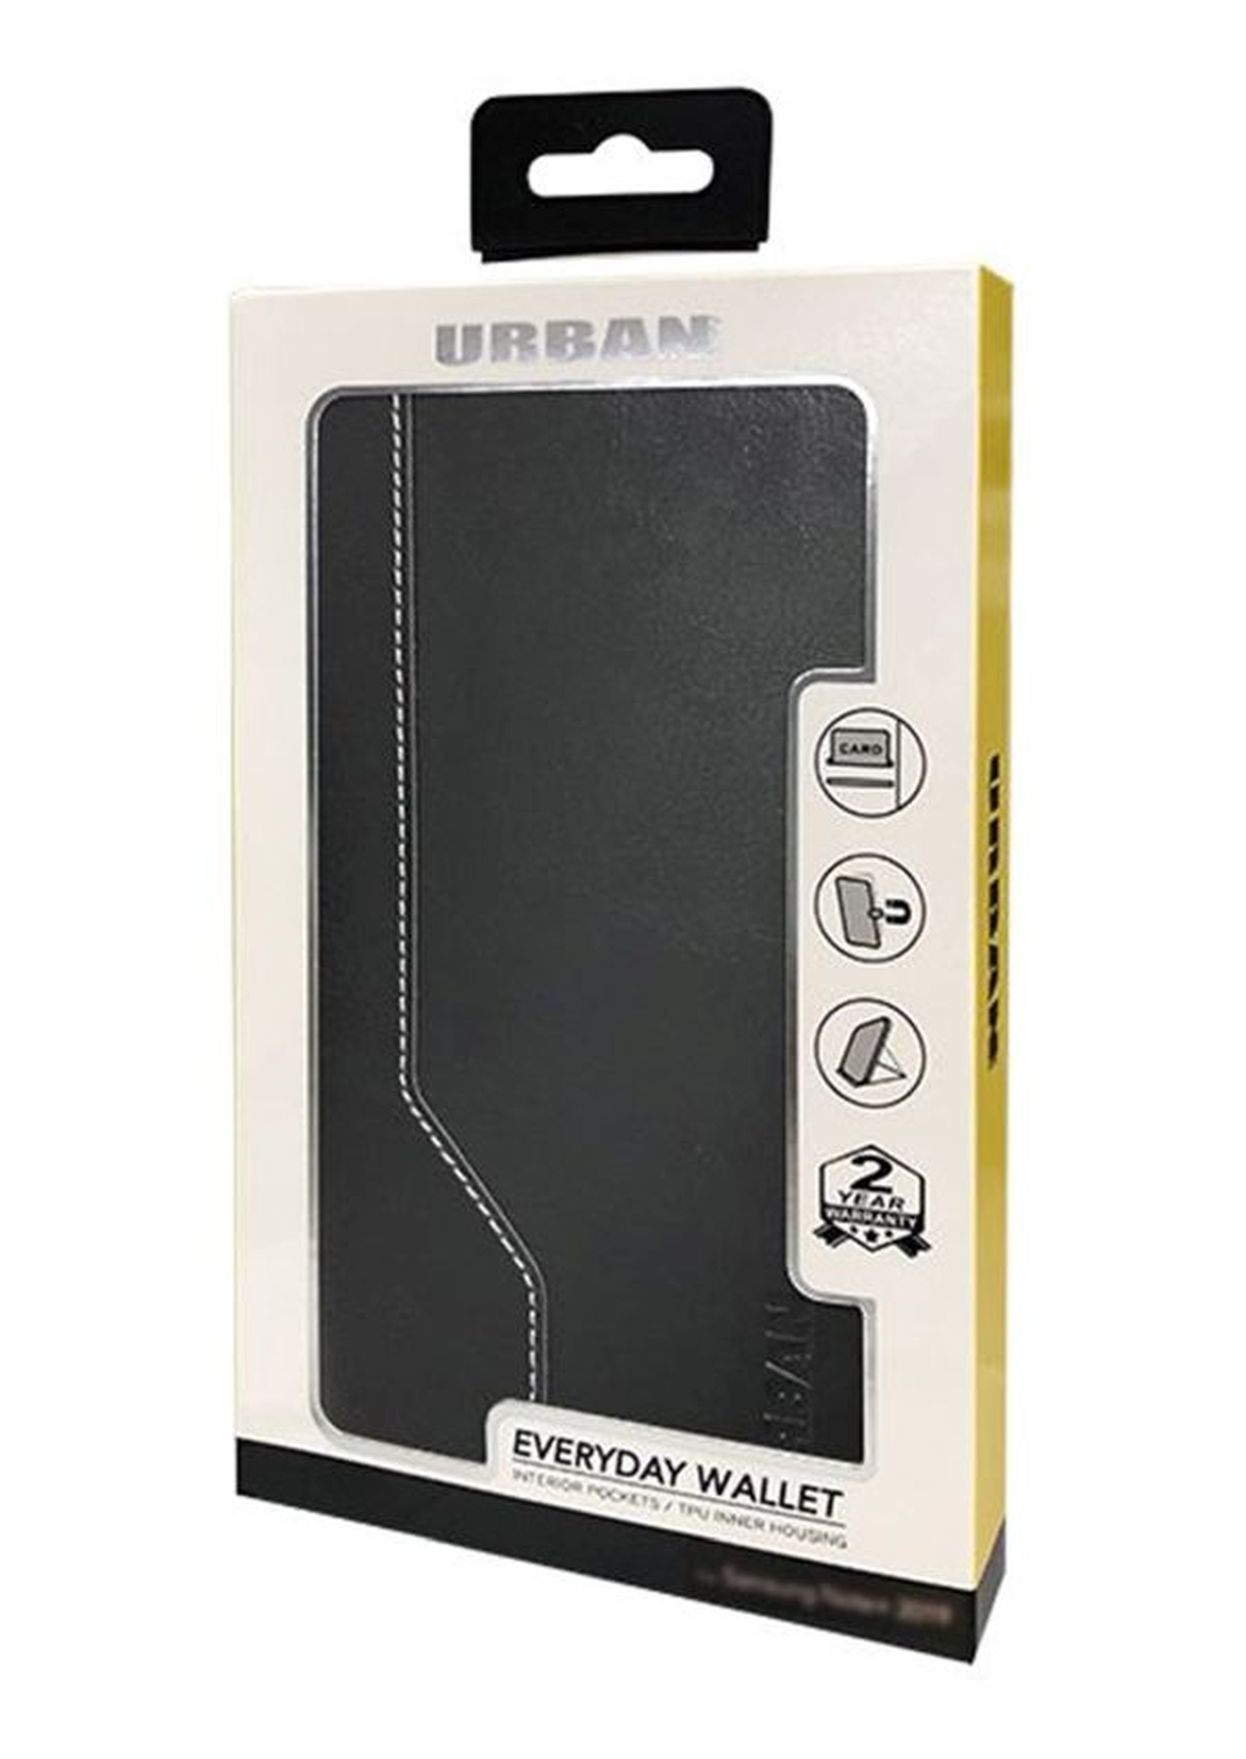 Urban Everyday Wallet S21 Plus Black